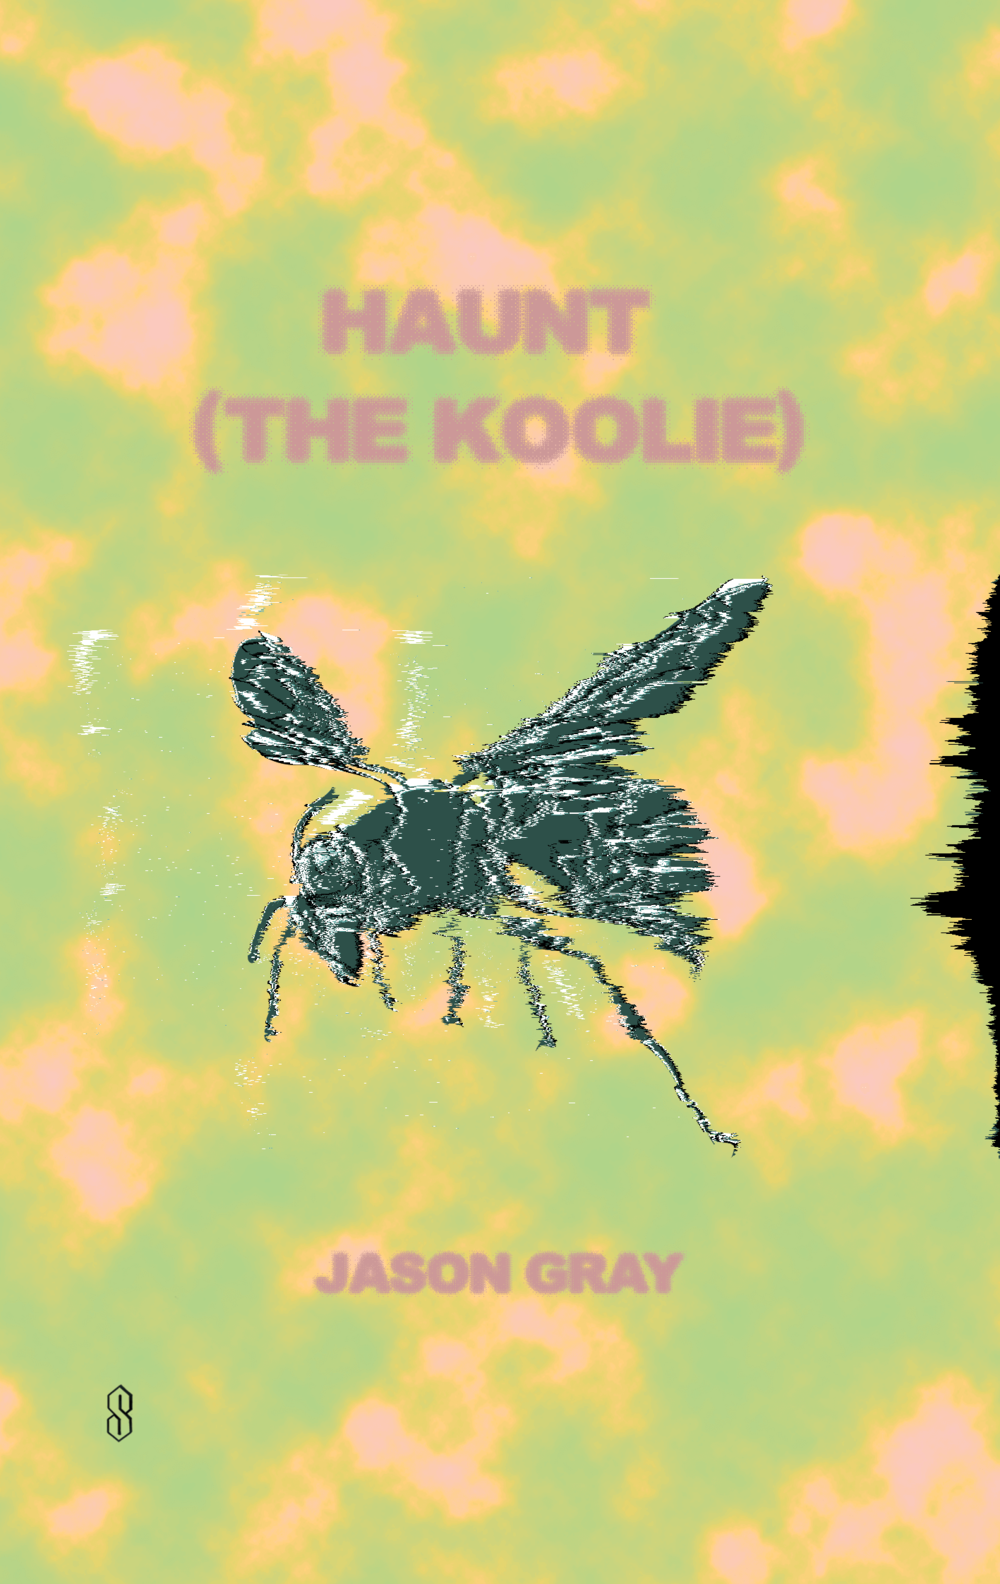 HAUNT (THE KOOLIE), by Jason Gray